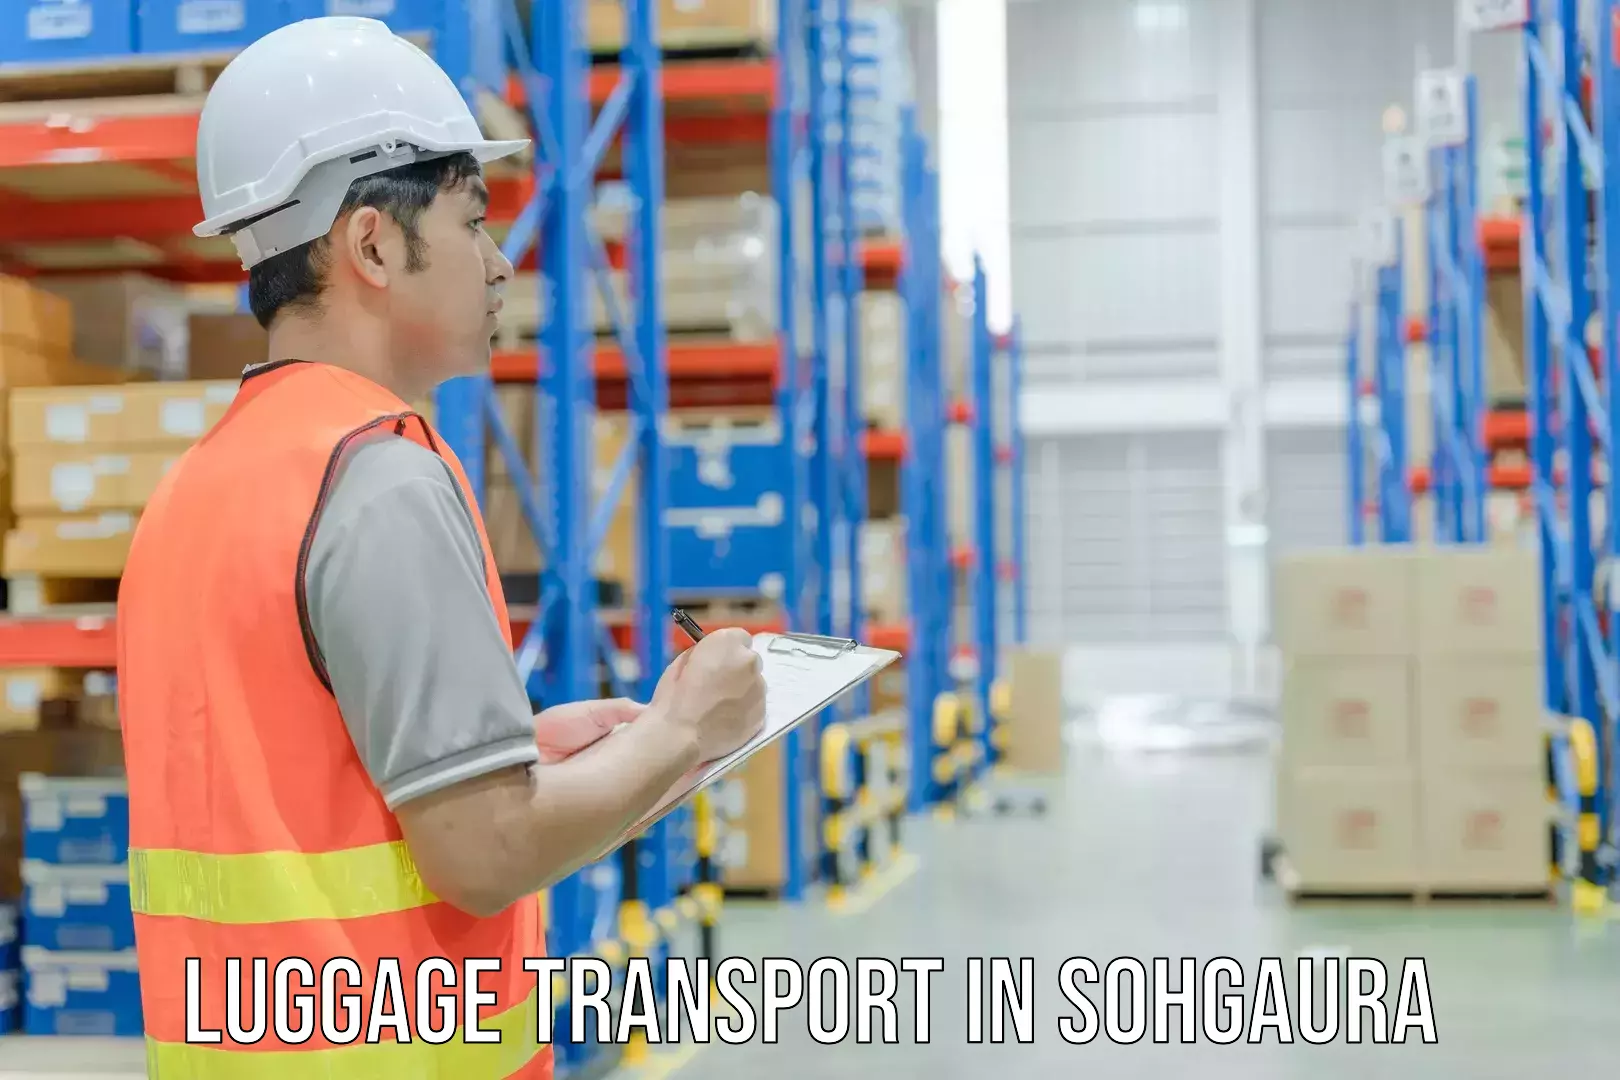 Baggage shipping advice in Sohgaura